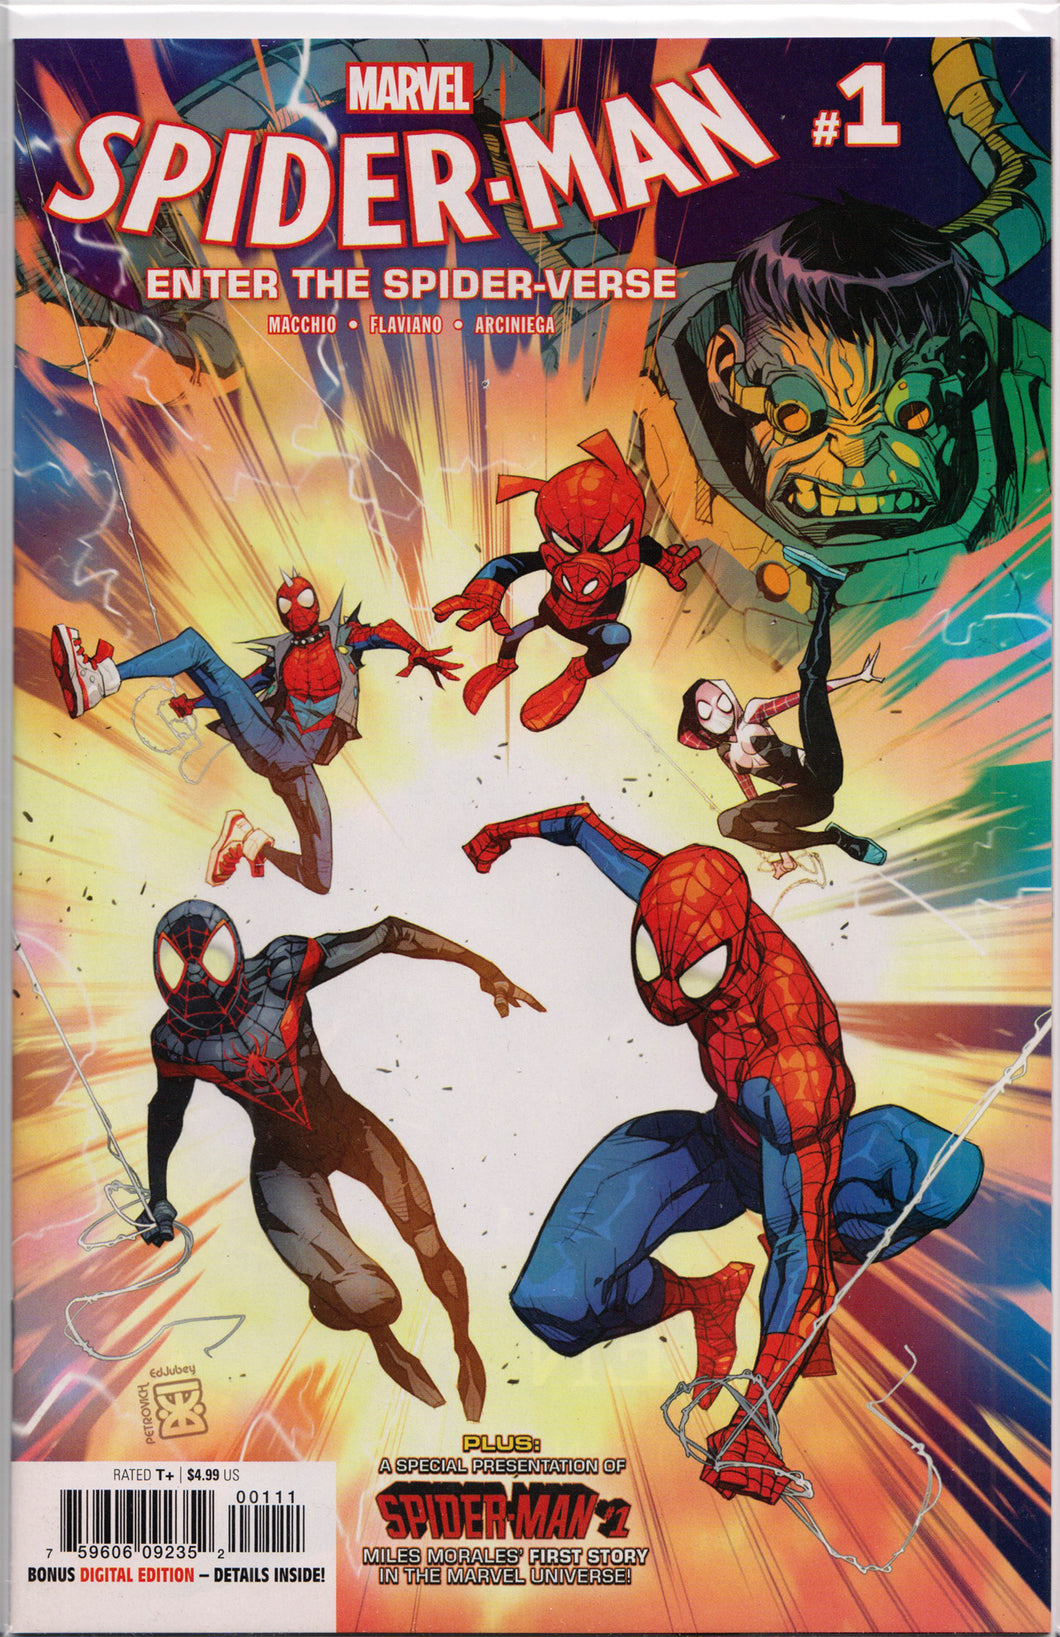 SPIDER-MAN: ENTER THE SPIDER-VERSE #1 COMIC BOOK ~ Marvel Comics